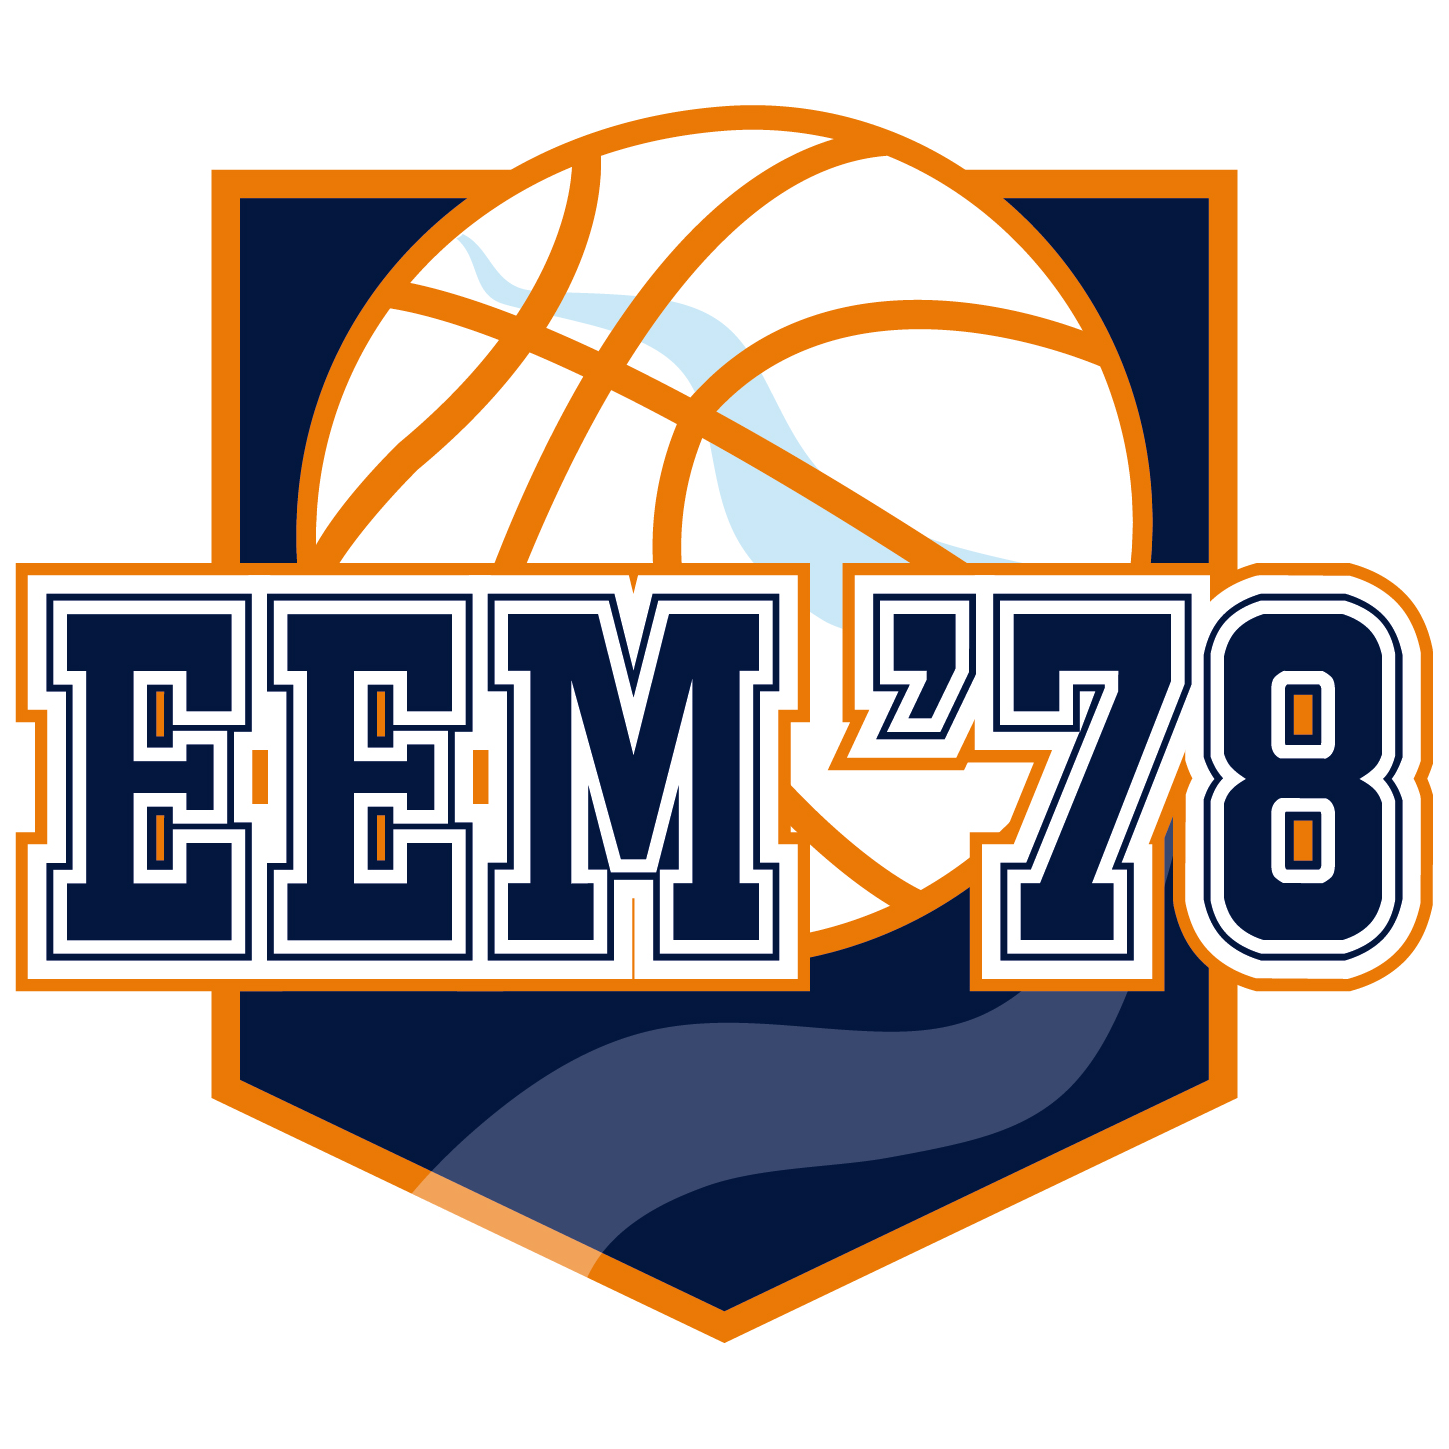 Basketbalvereniging Eem'78